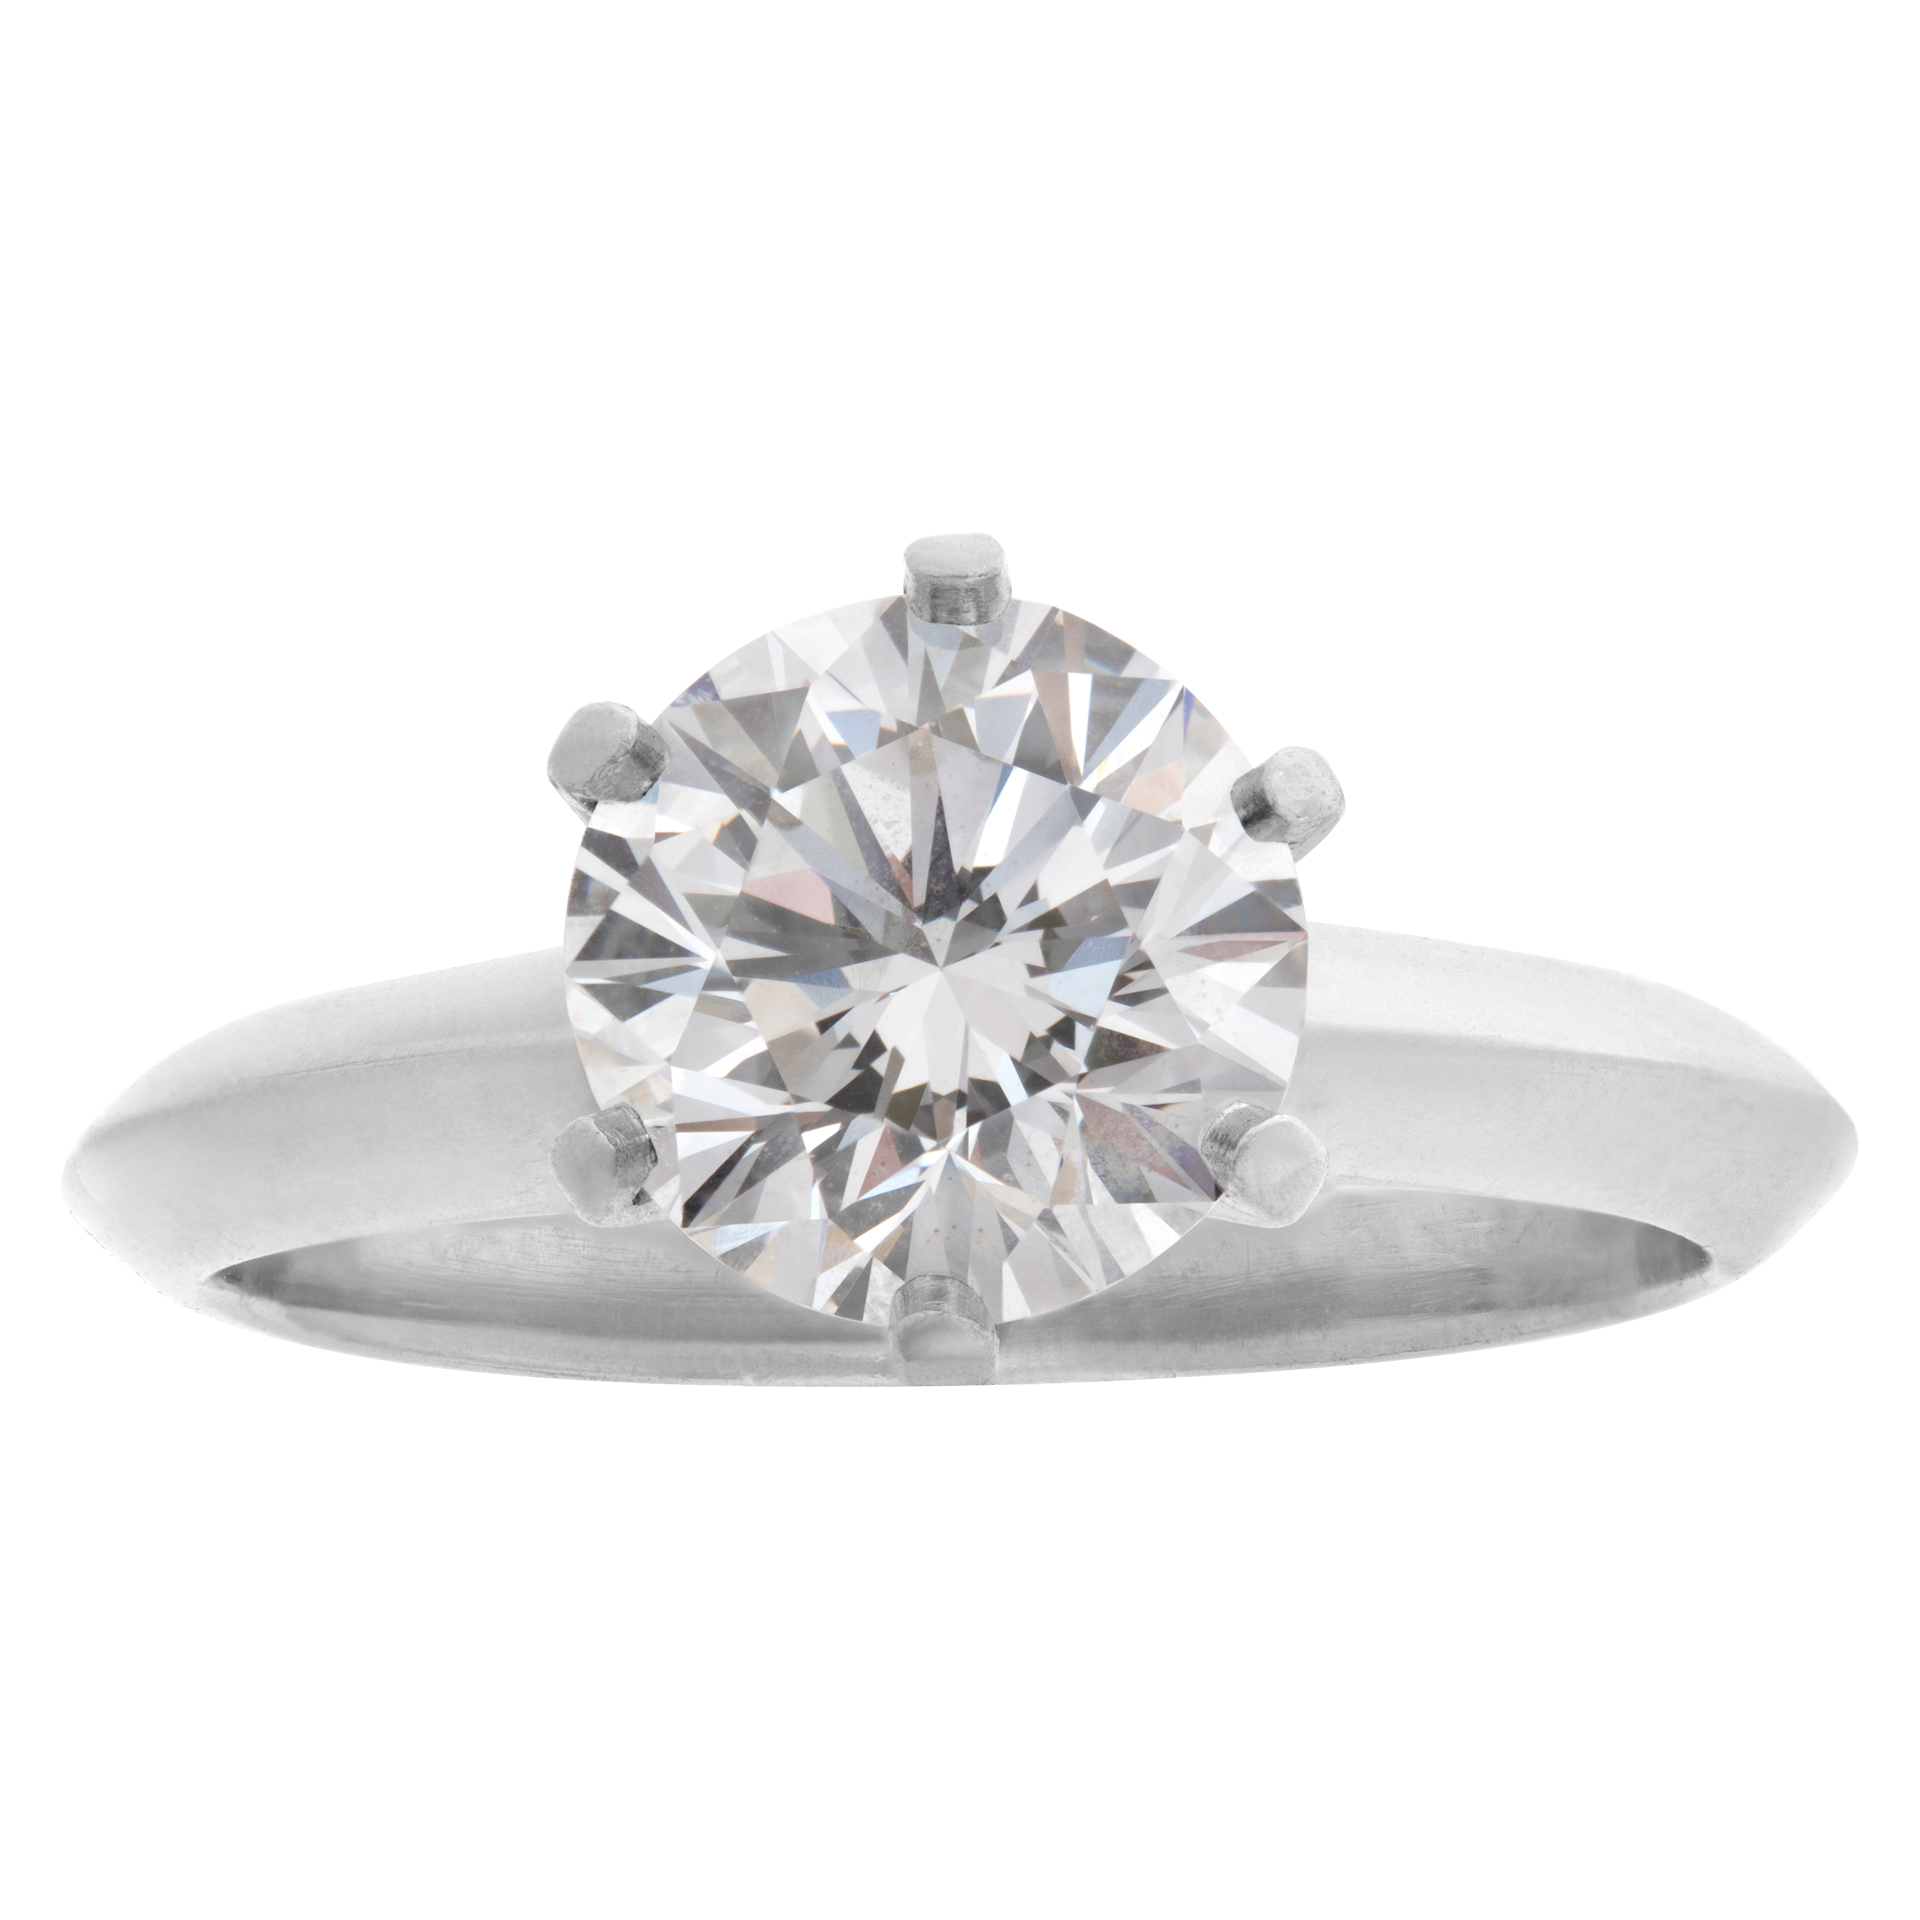 Tiffany & Co. round brilliant diamond 1.53 carat